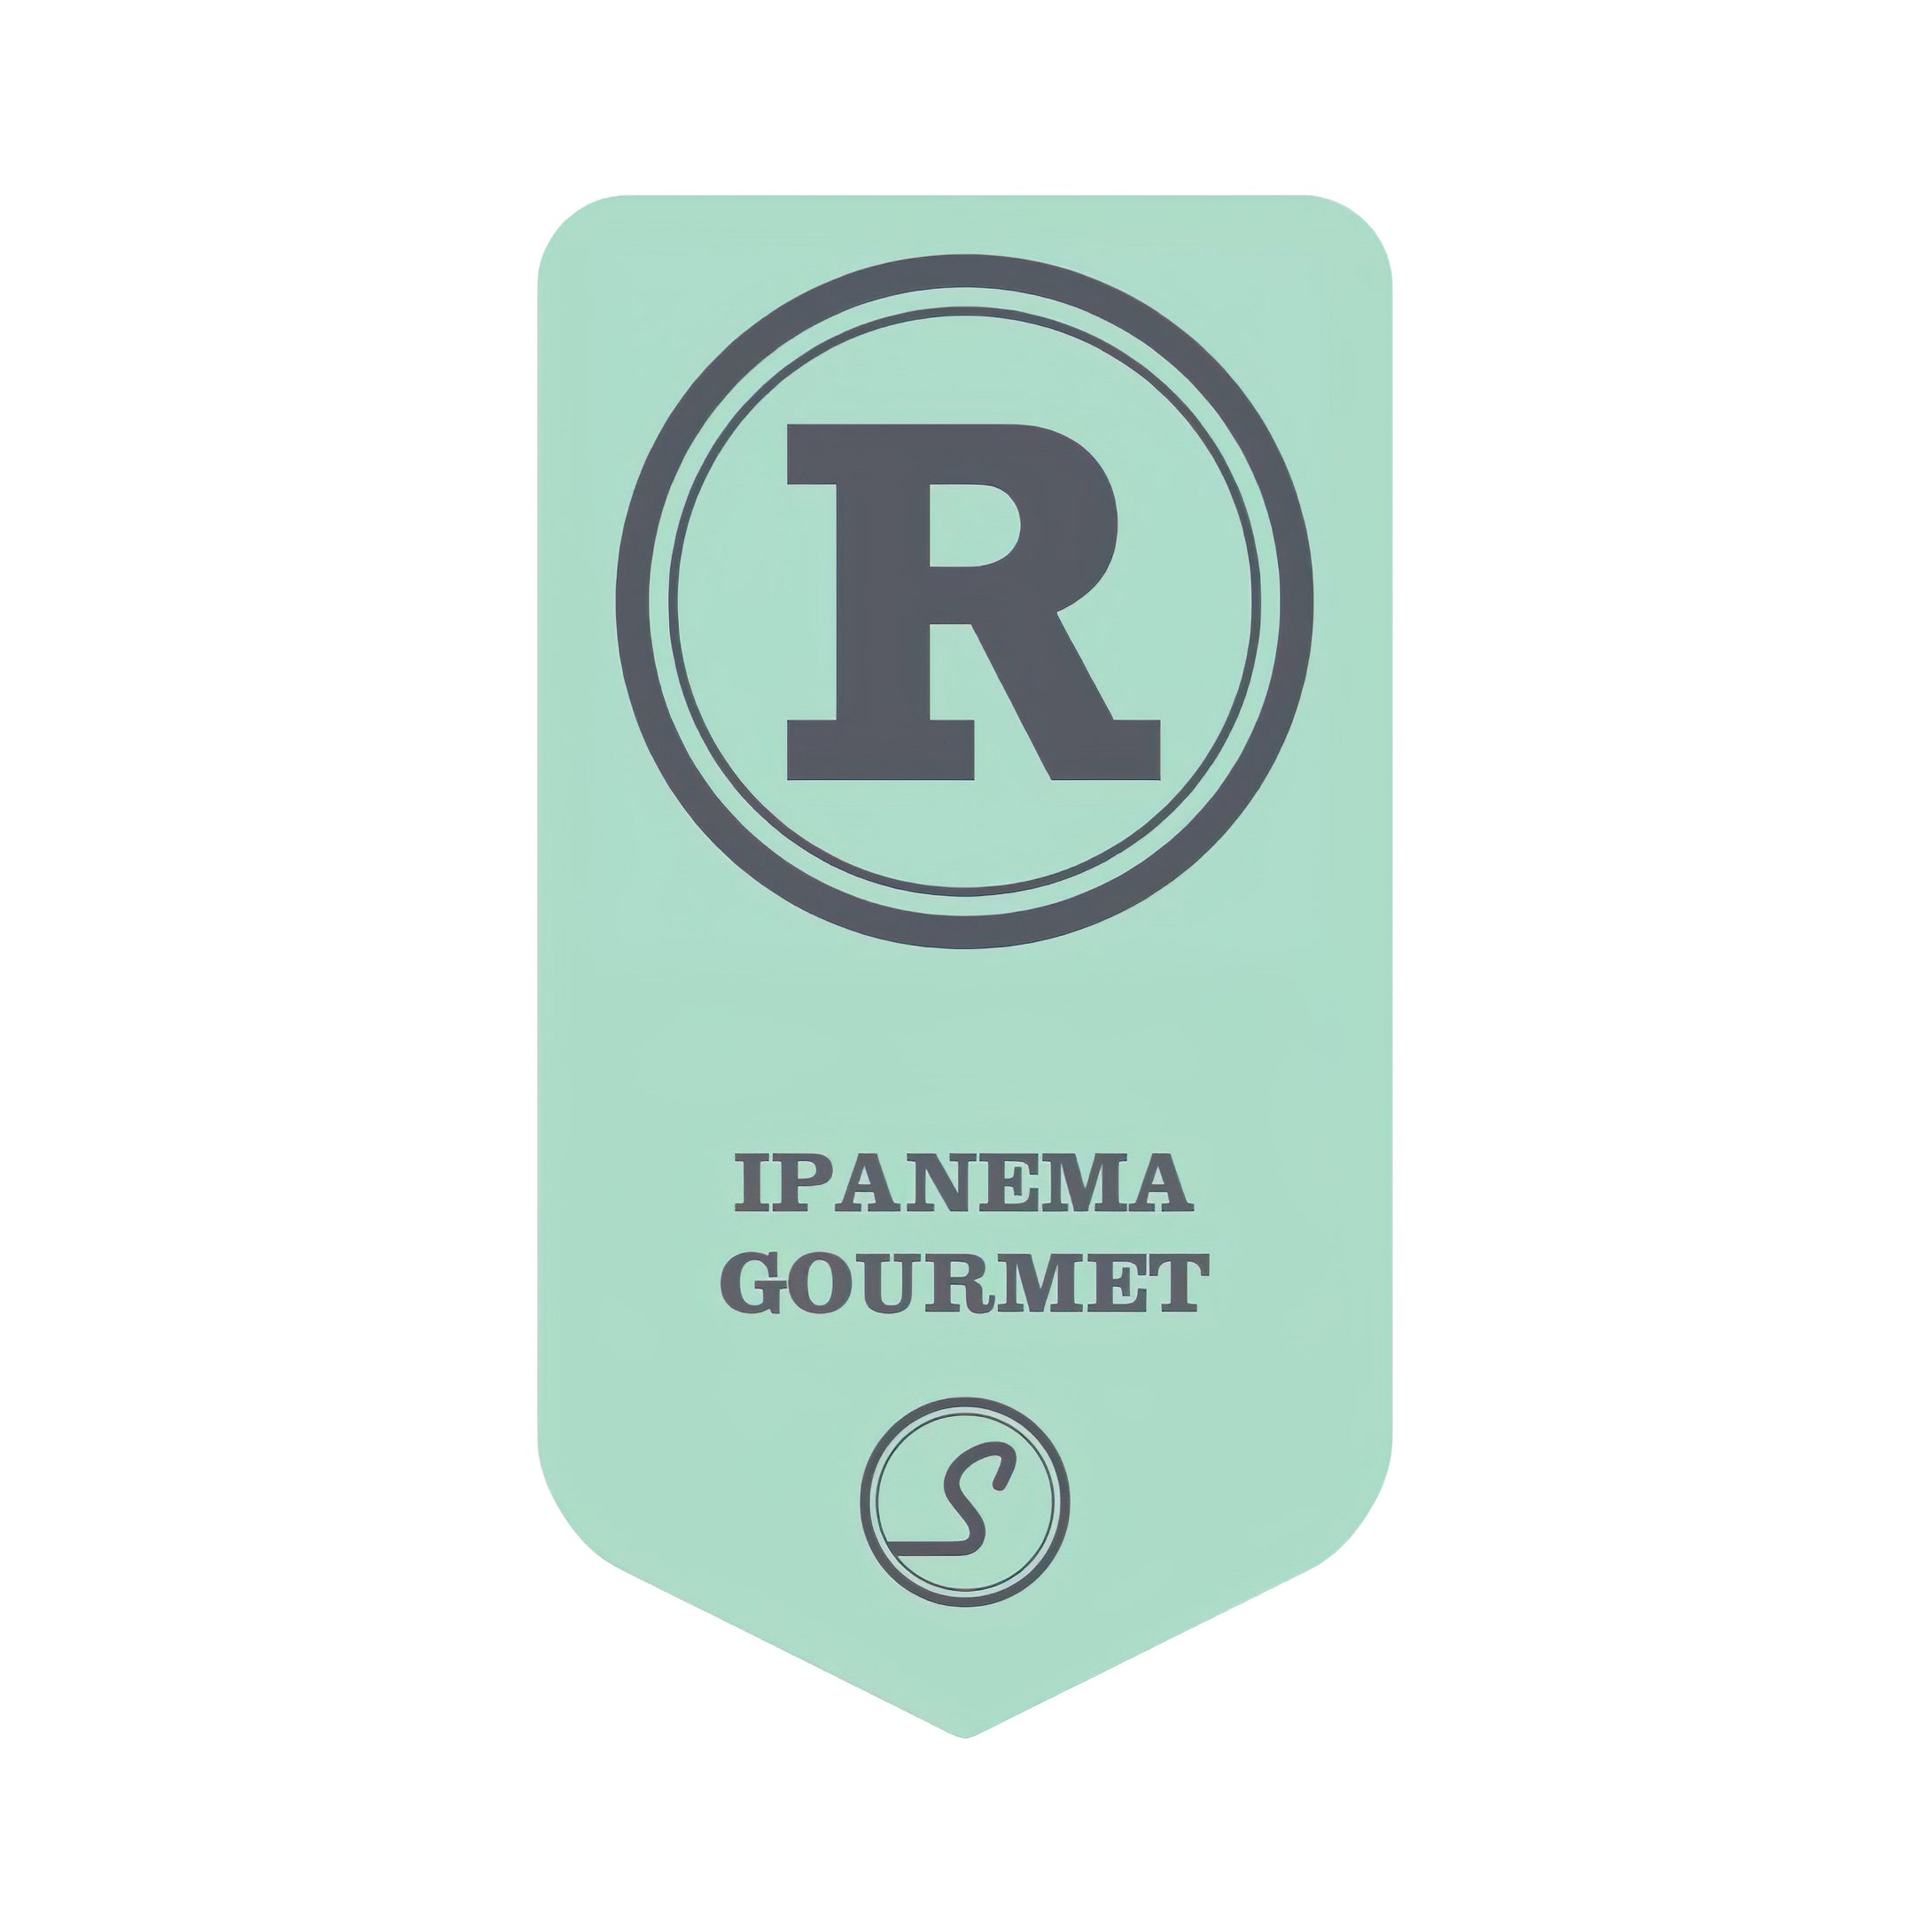 Ipanema Gourmet - Rainforest Alliance